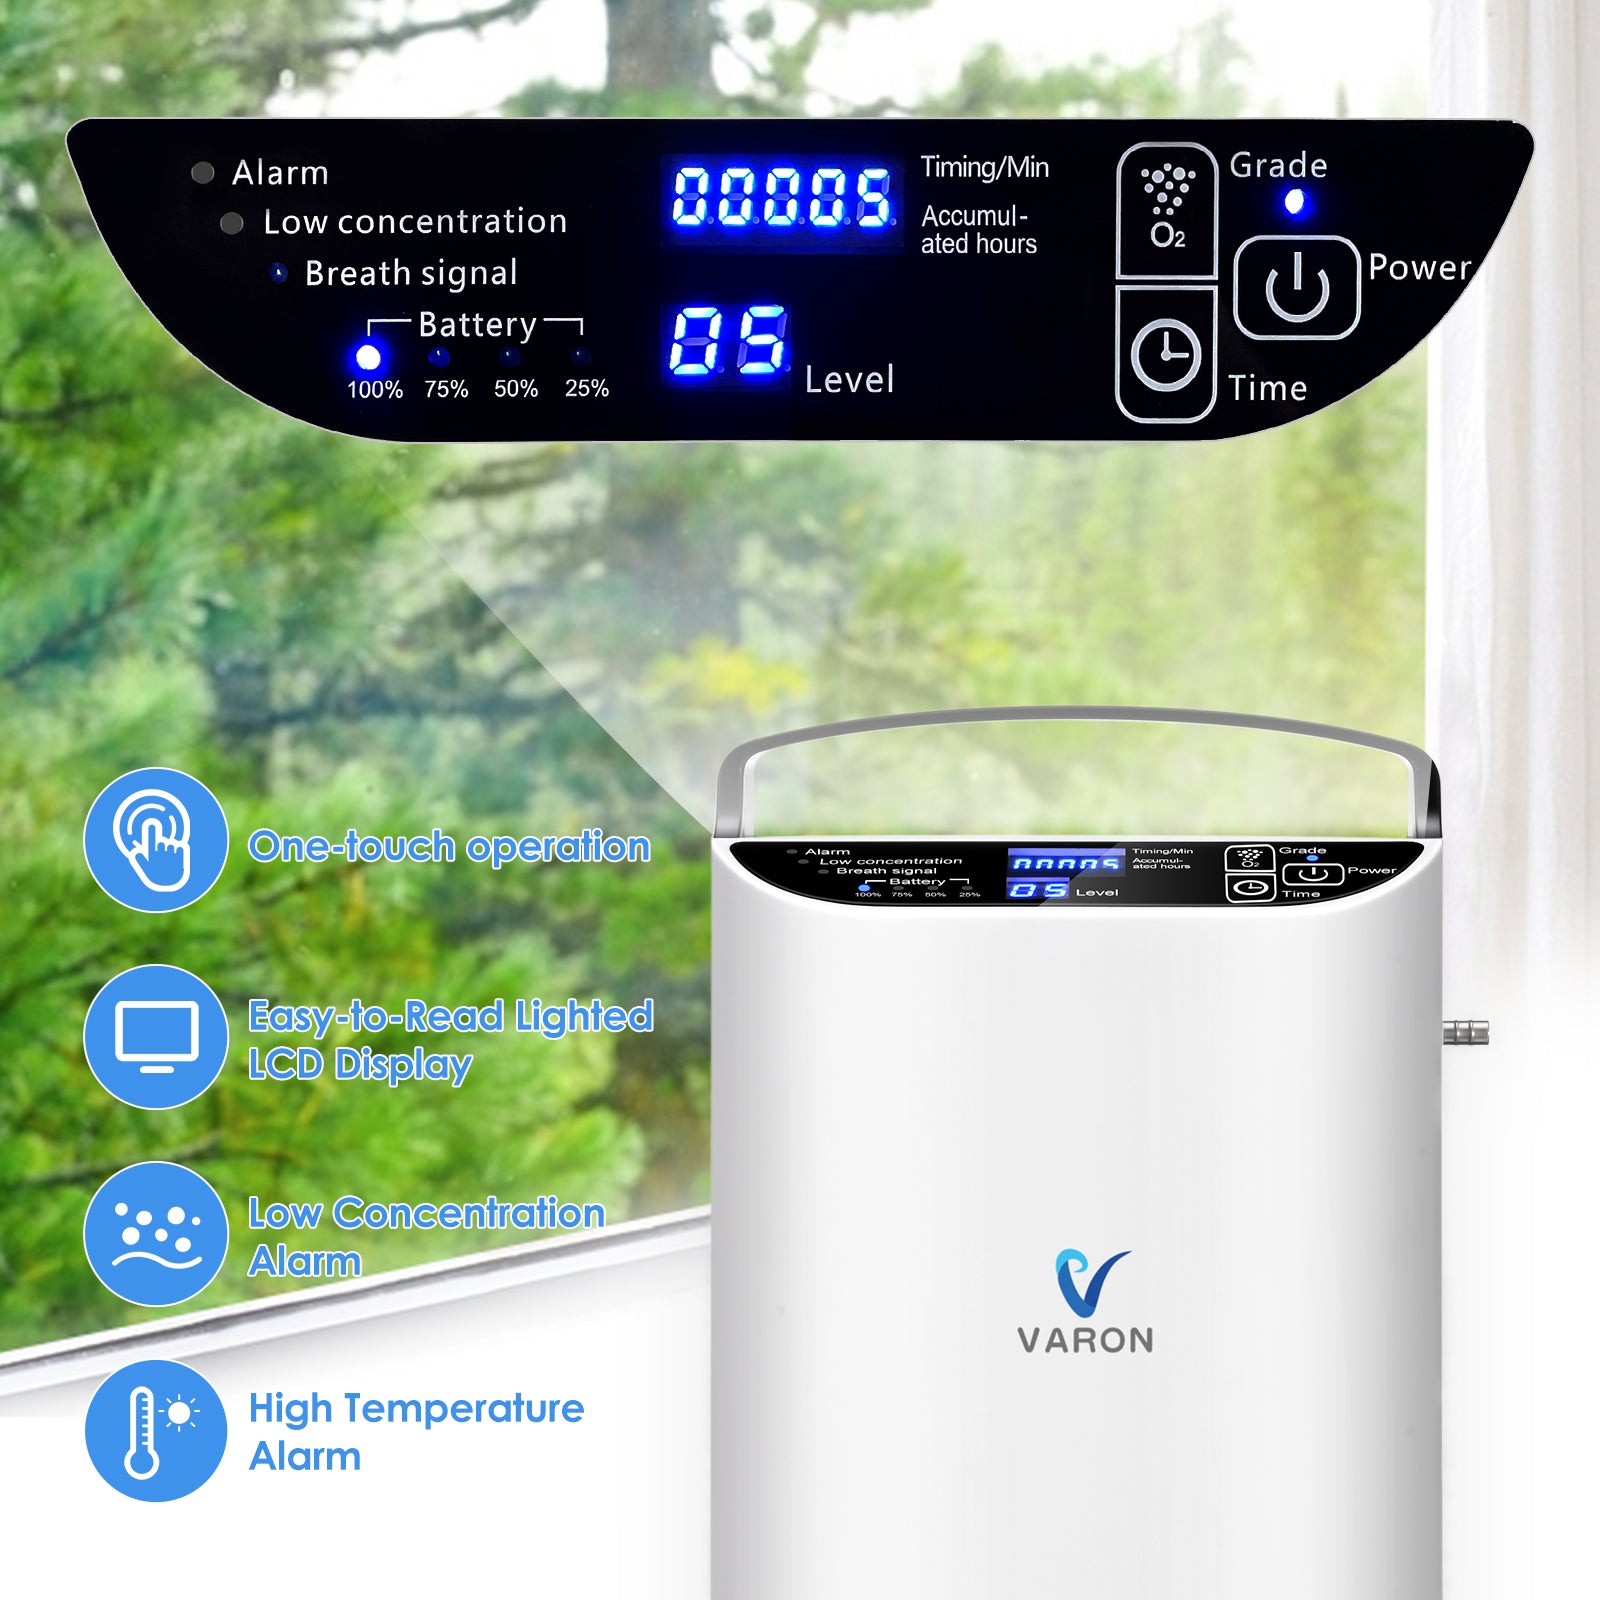 VARON Portable Oxygen Concentrator NT-01